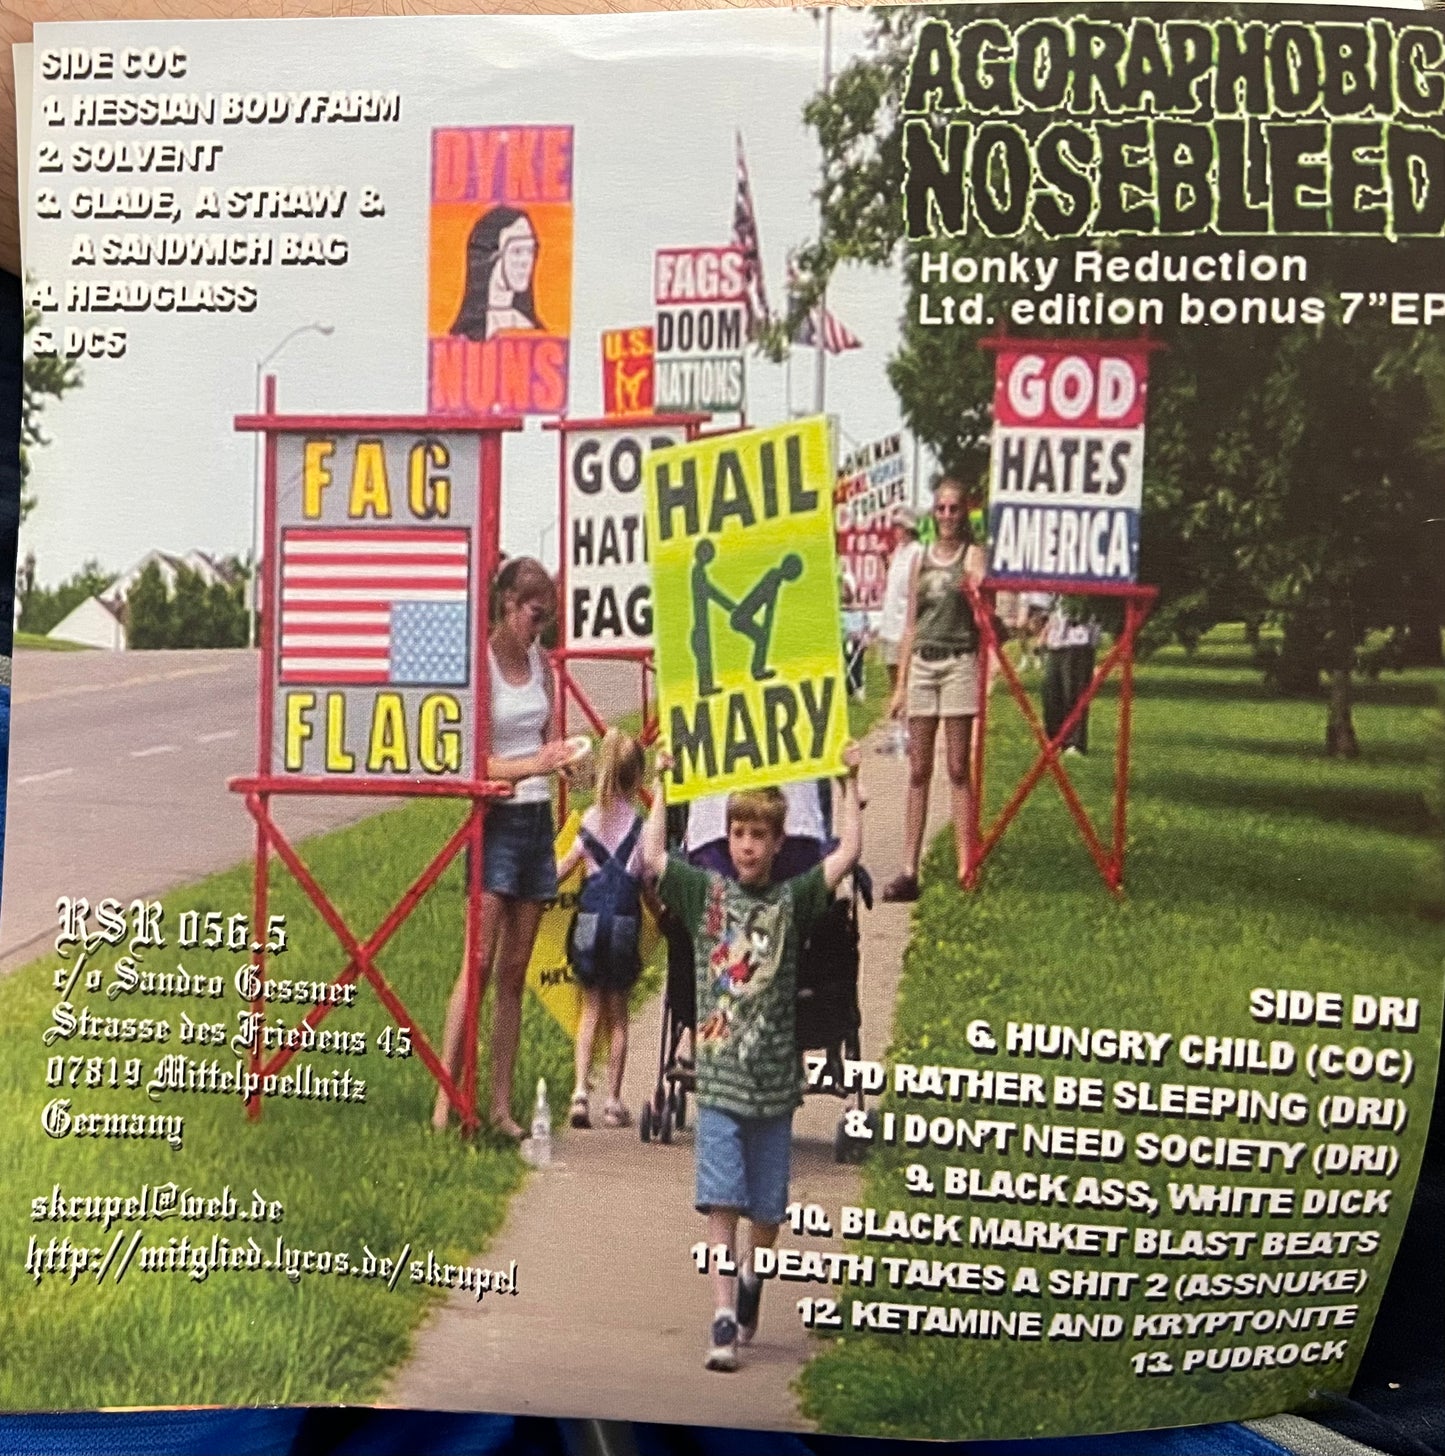 Agoraphobic Nosebleed - The Glue That Binds Us (2006, Germany)